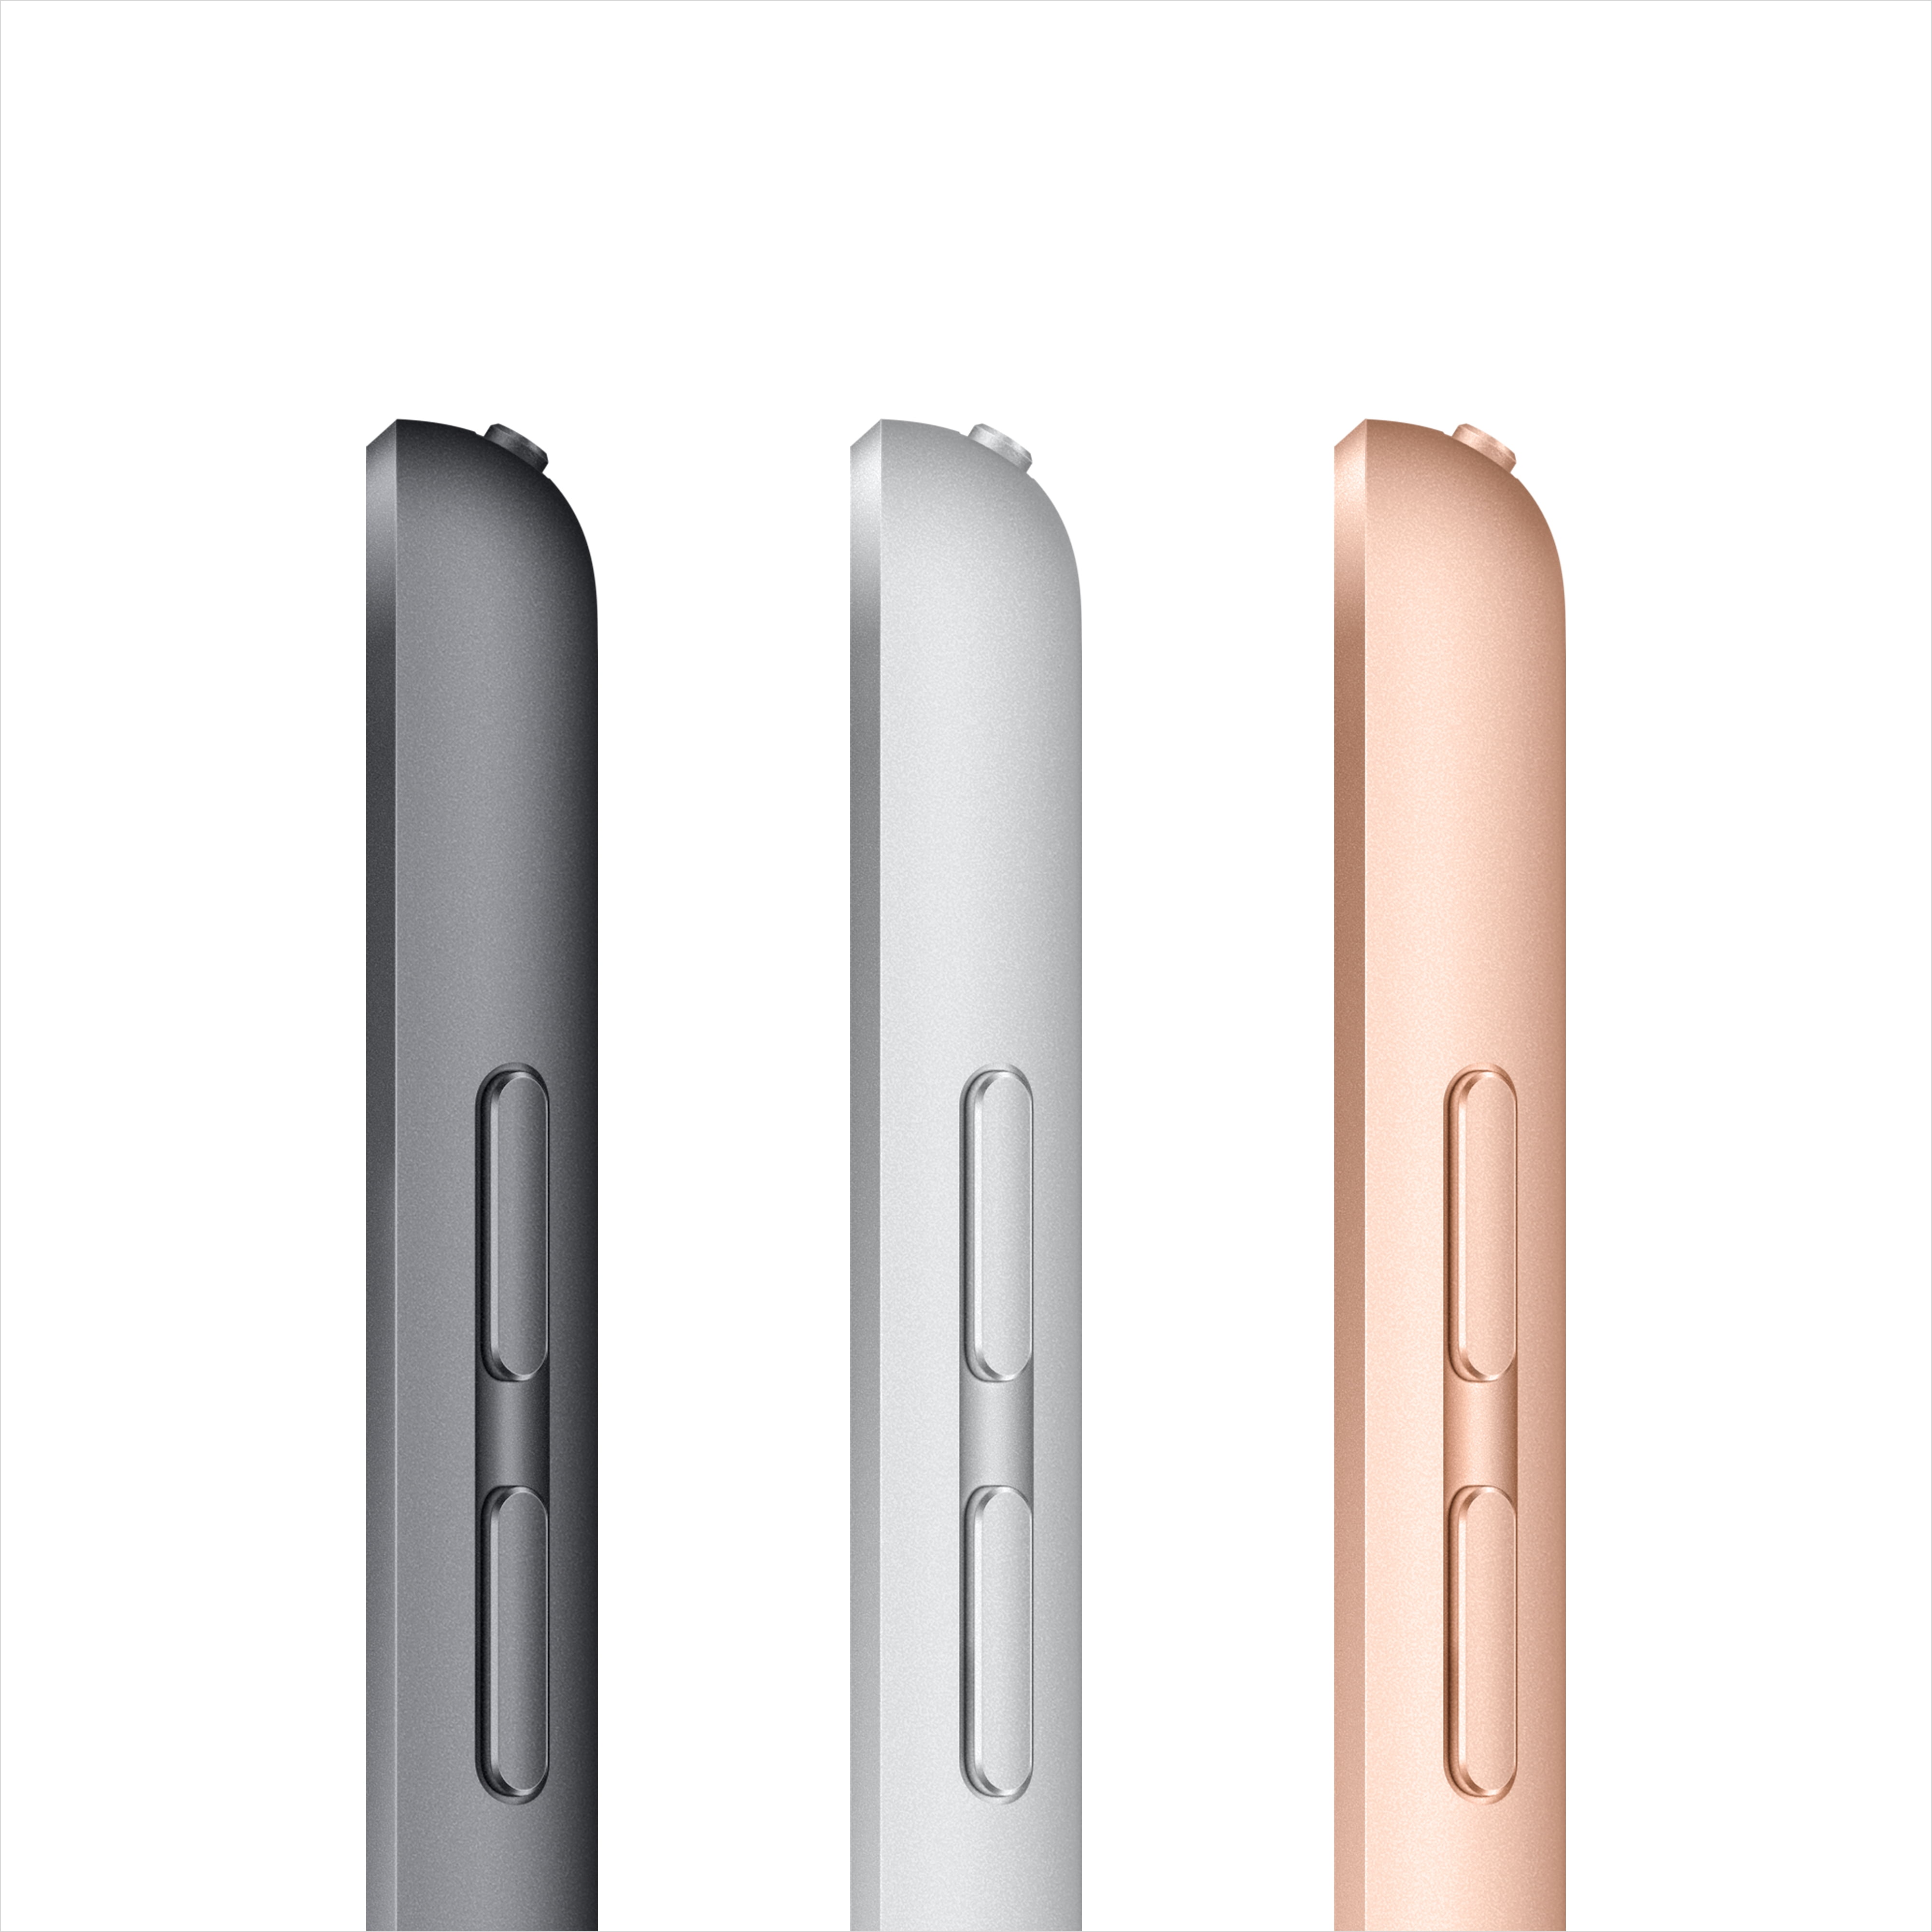 Apple 10.2-inch iPad Wi-Fi 32GB - Space Gray (8th Generation 